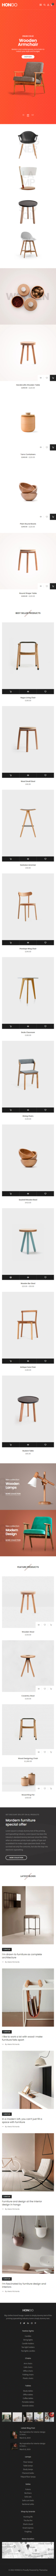 Hongo furniture e-commerce clean